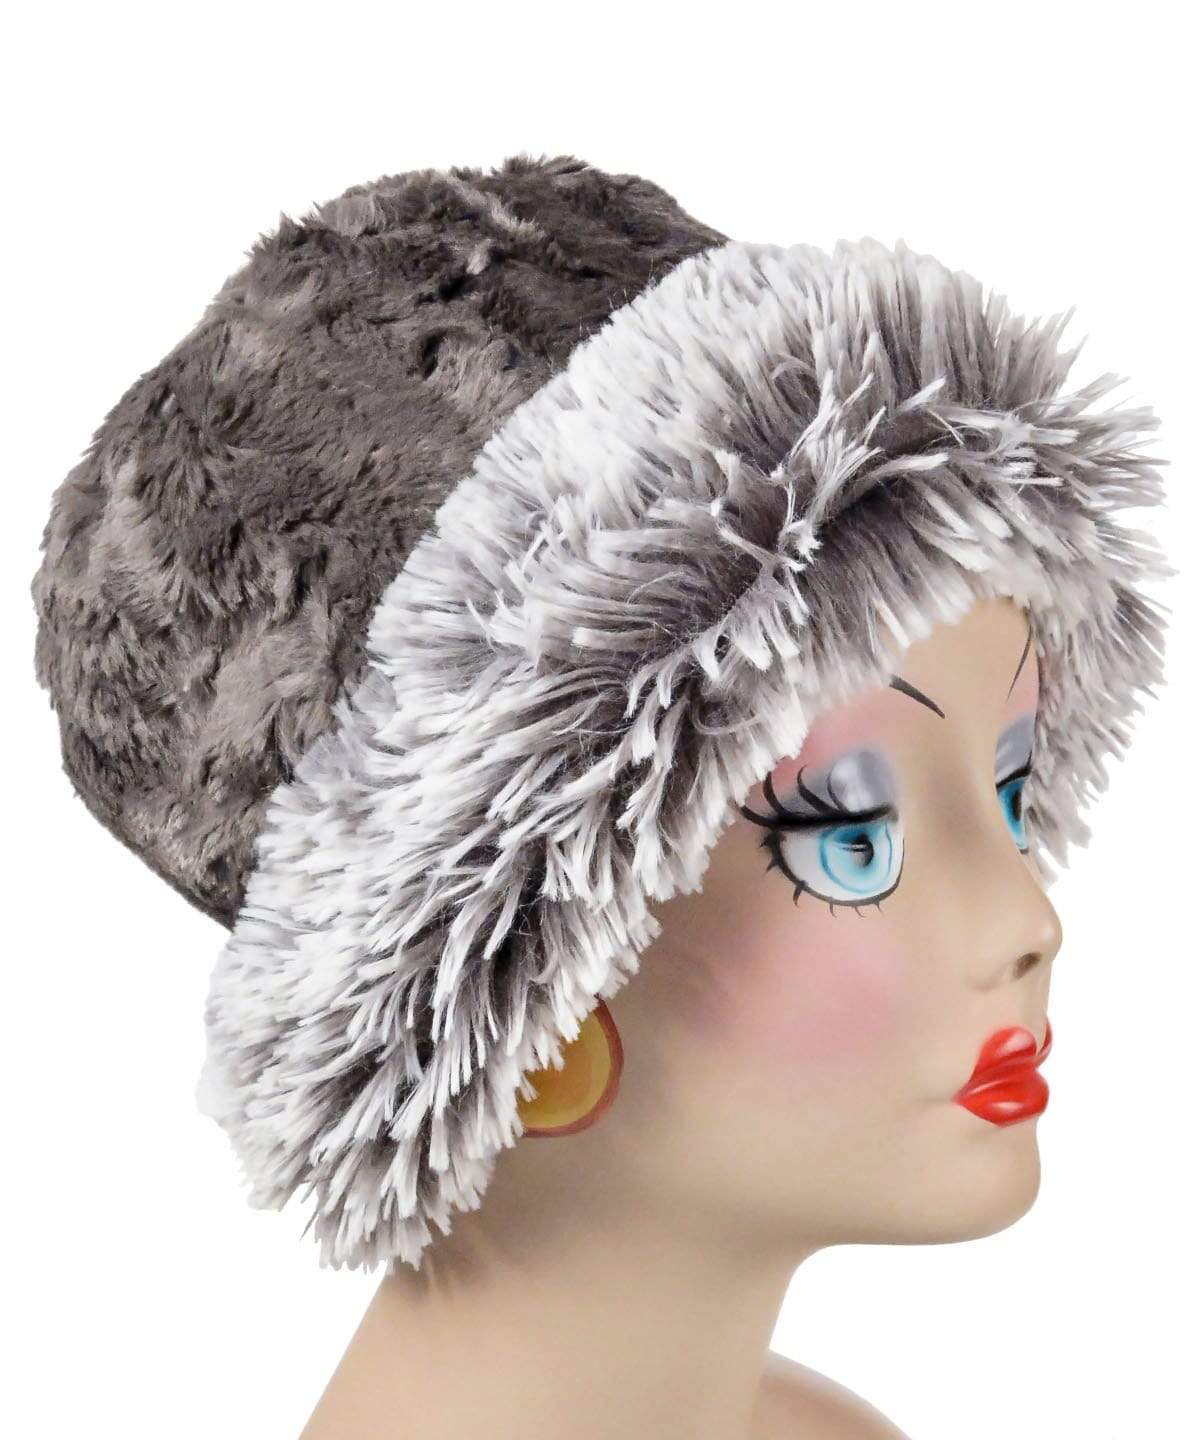 Cuffed Pillbox Hat Pearl Fox with Cuddly Faux Fur in Gray